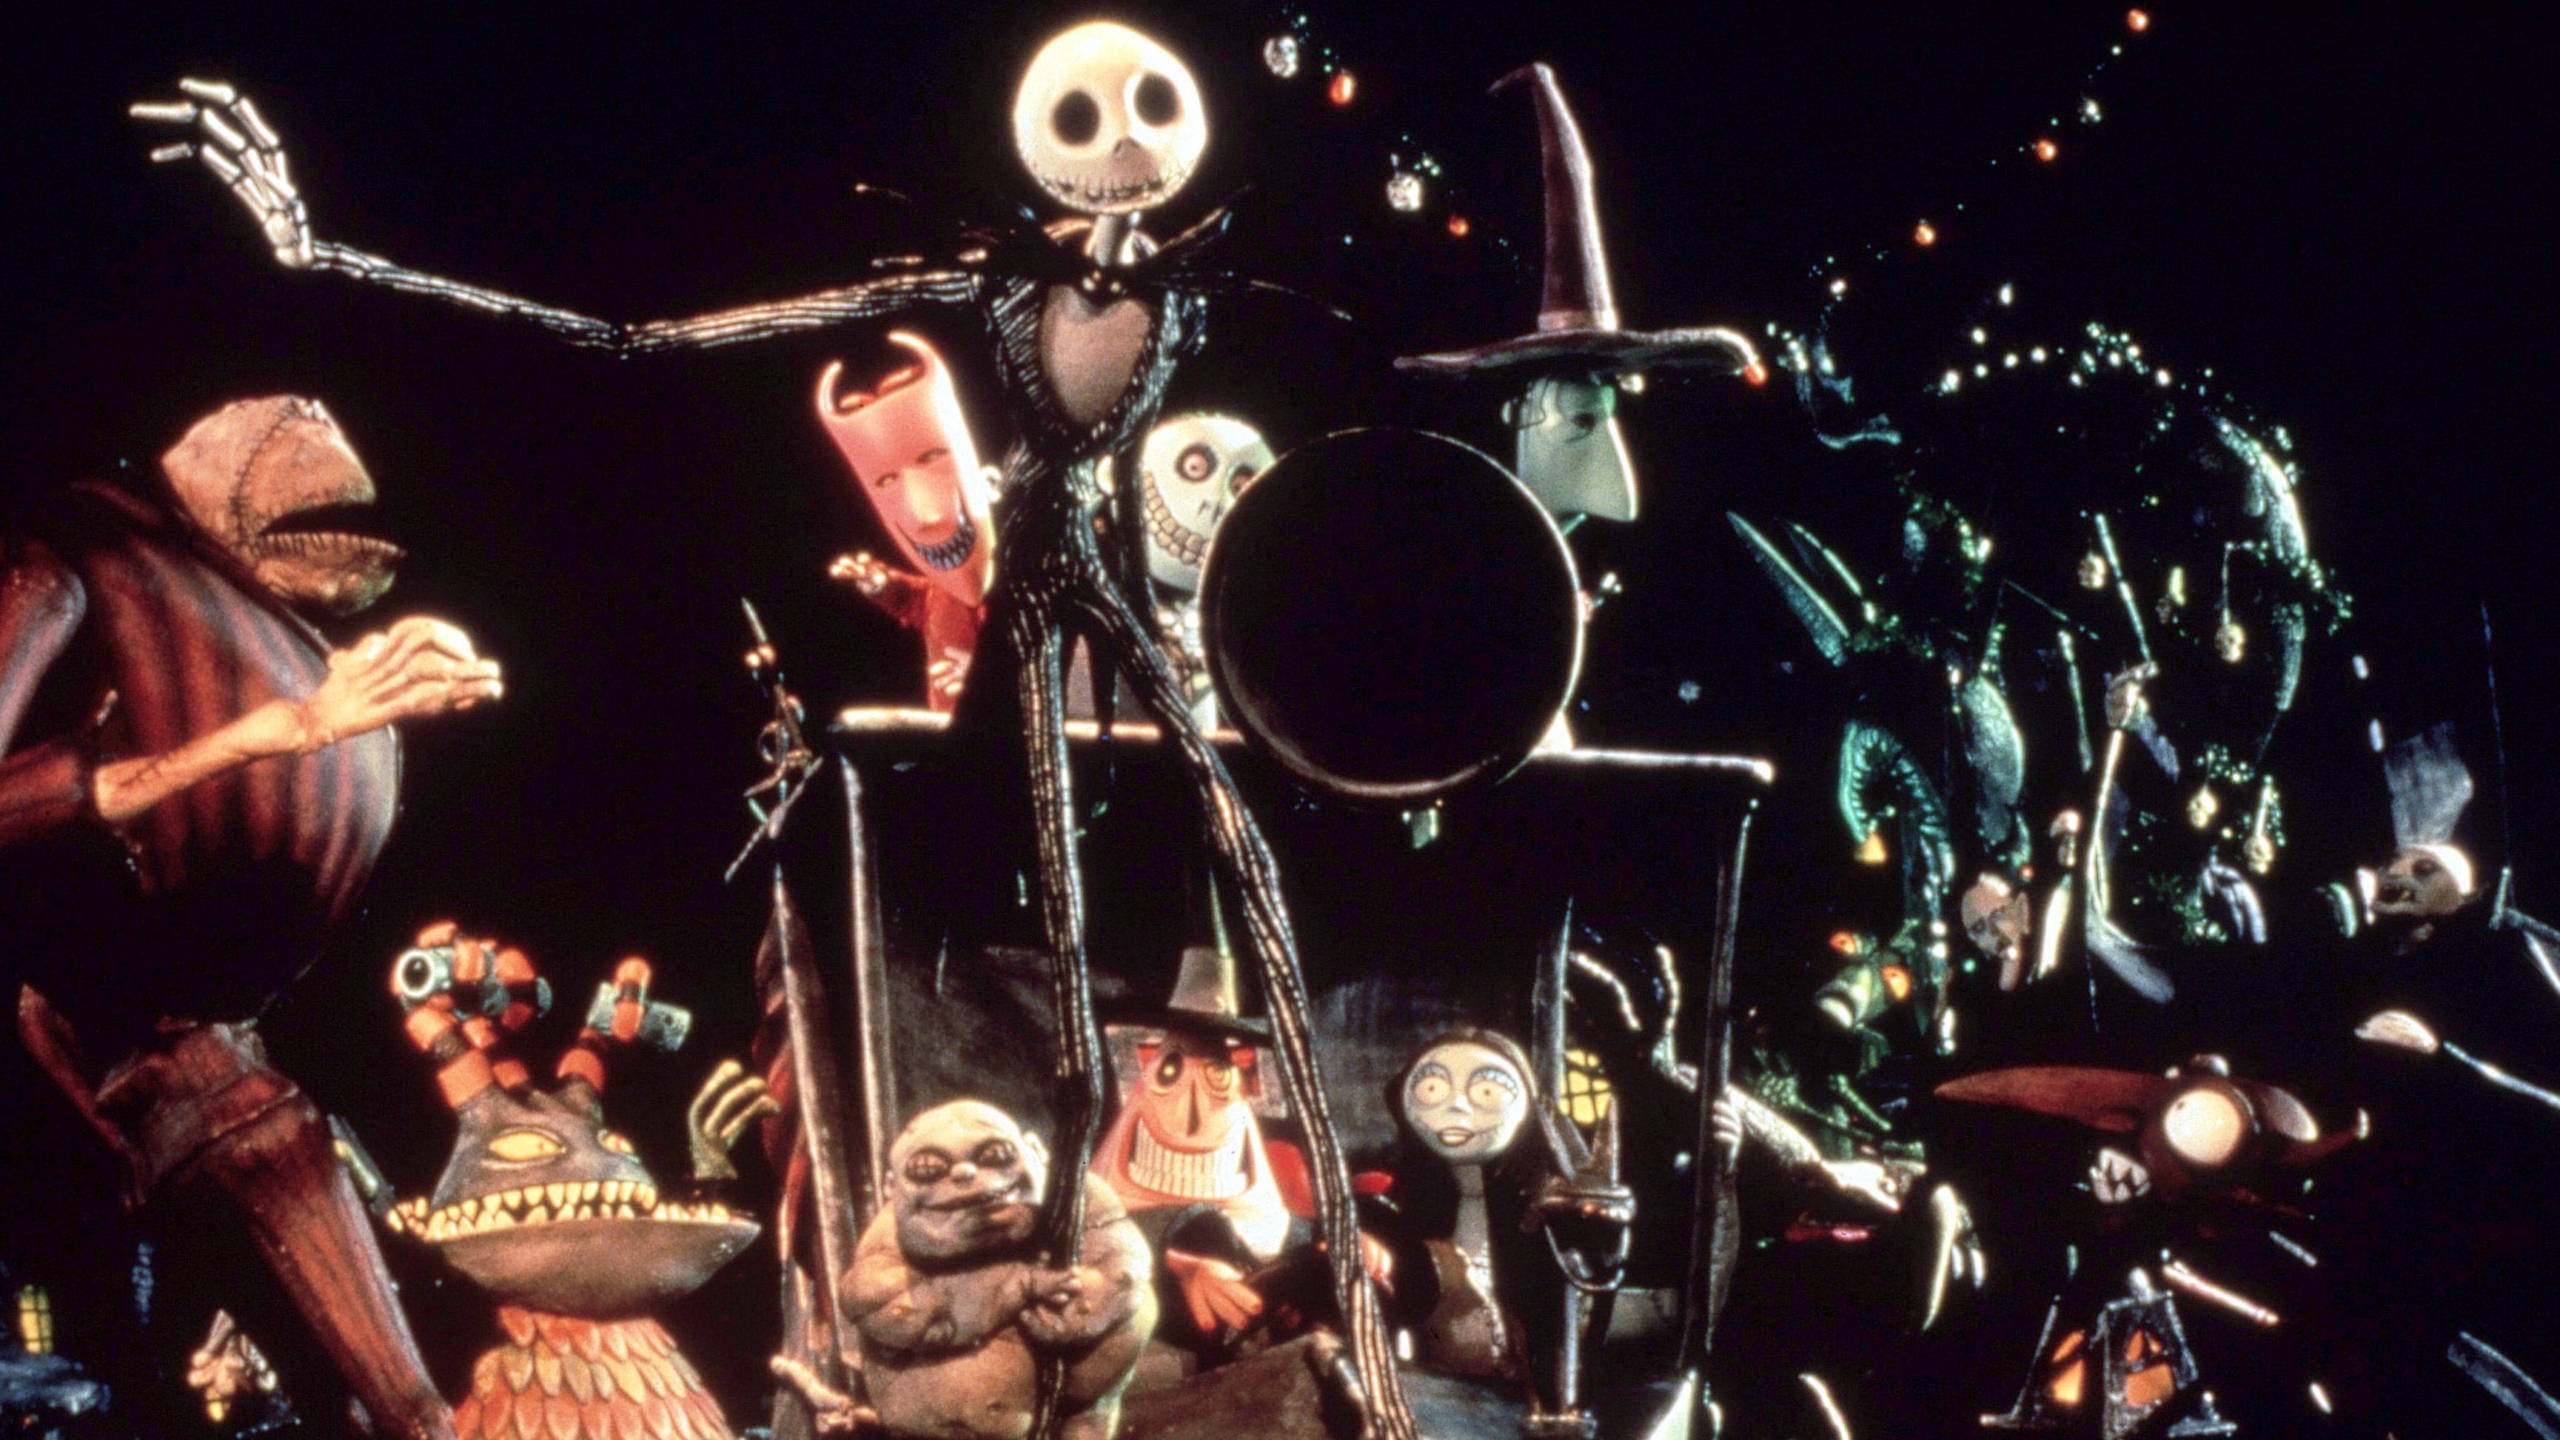 Längst ein Klassiker des Animationsfilms: "Nightmare Before Christmas"